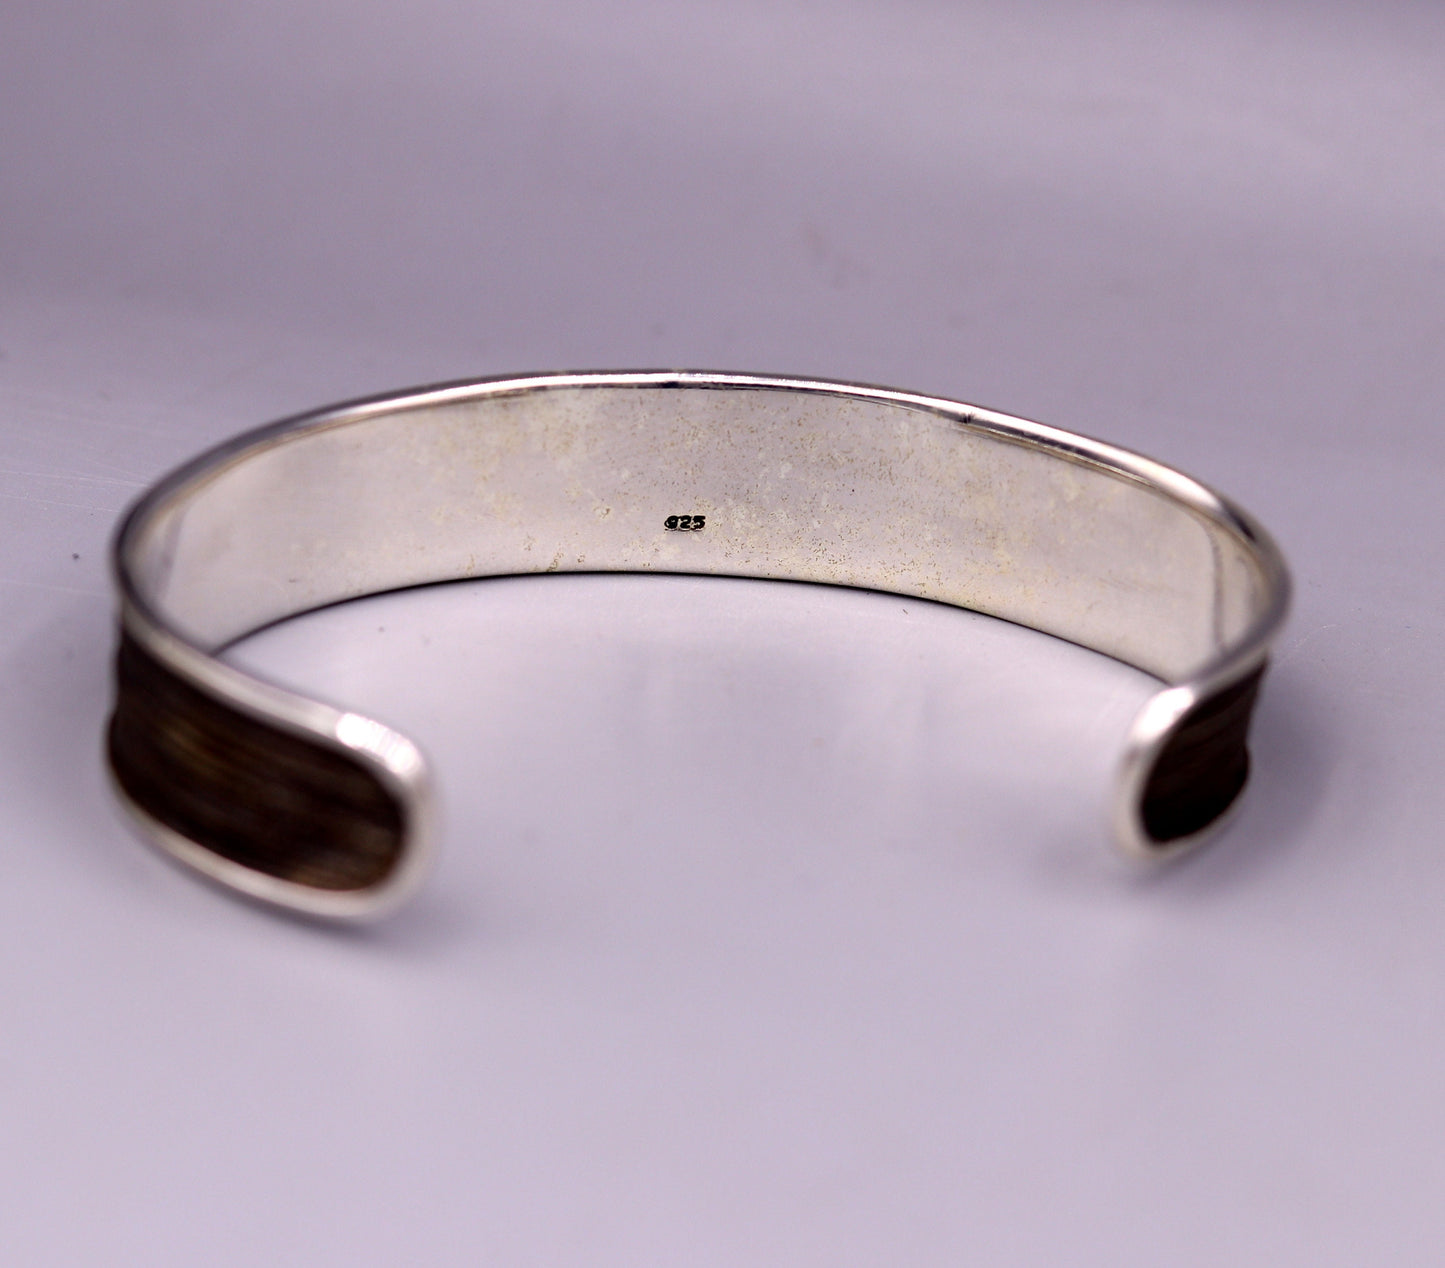 Vintage antique design adjustable mantra bangle bracelet 925 sterling silver "Aum Namah Shivay" unisex bracelet gifting jewelry nsk141 - TRIBAL ORNAMENTS